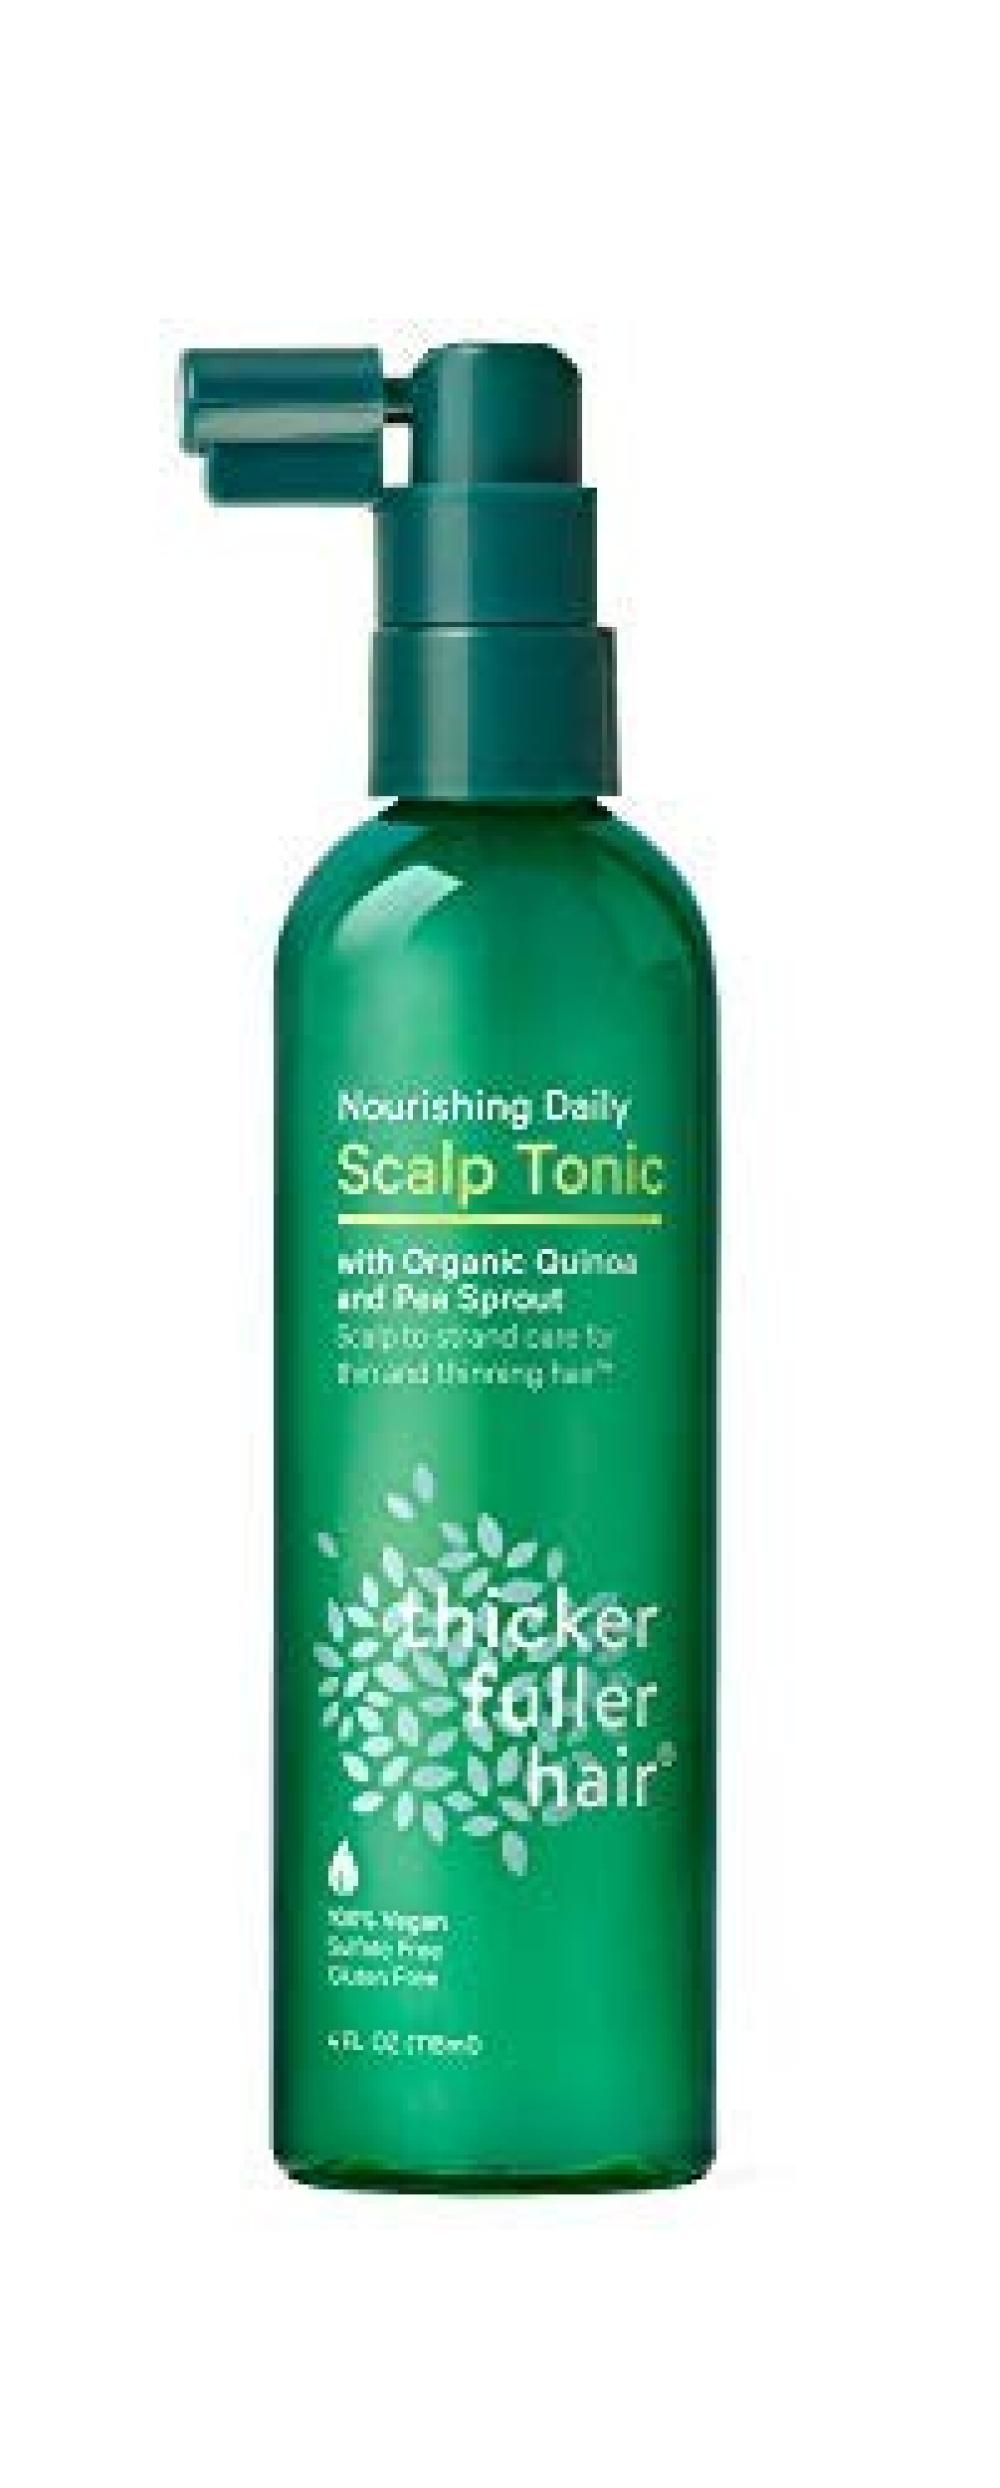 LueInJoy Nourishing Daily Scalp Tonic Green 4 Fl Oz (Tnico) - image 1 of 1